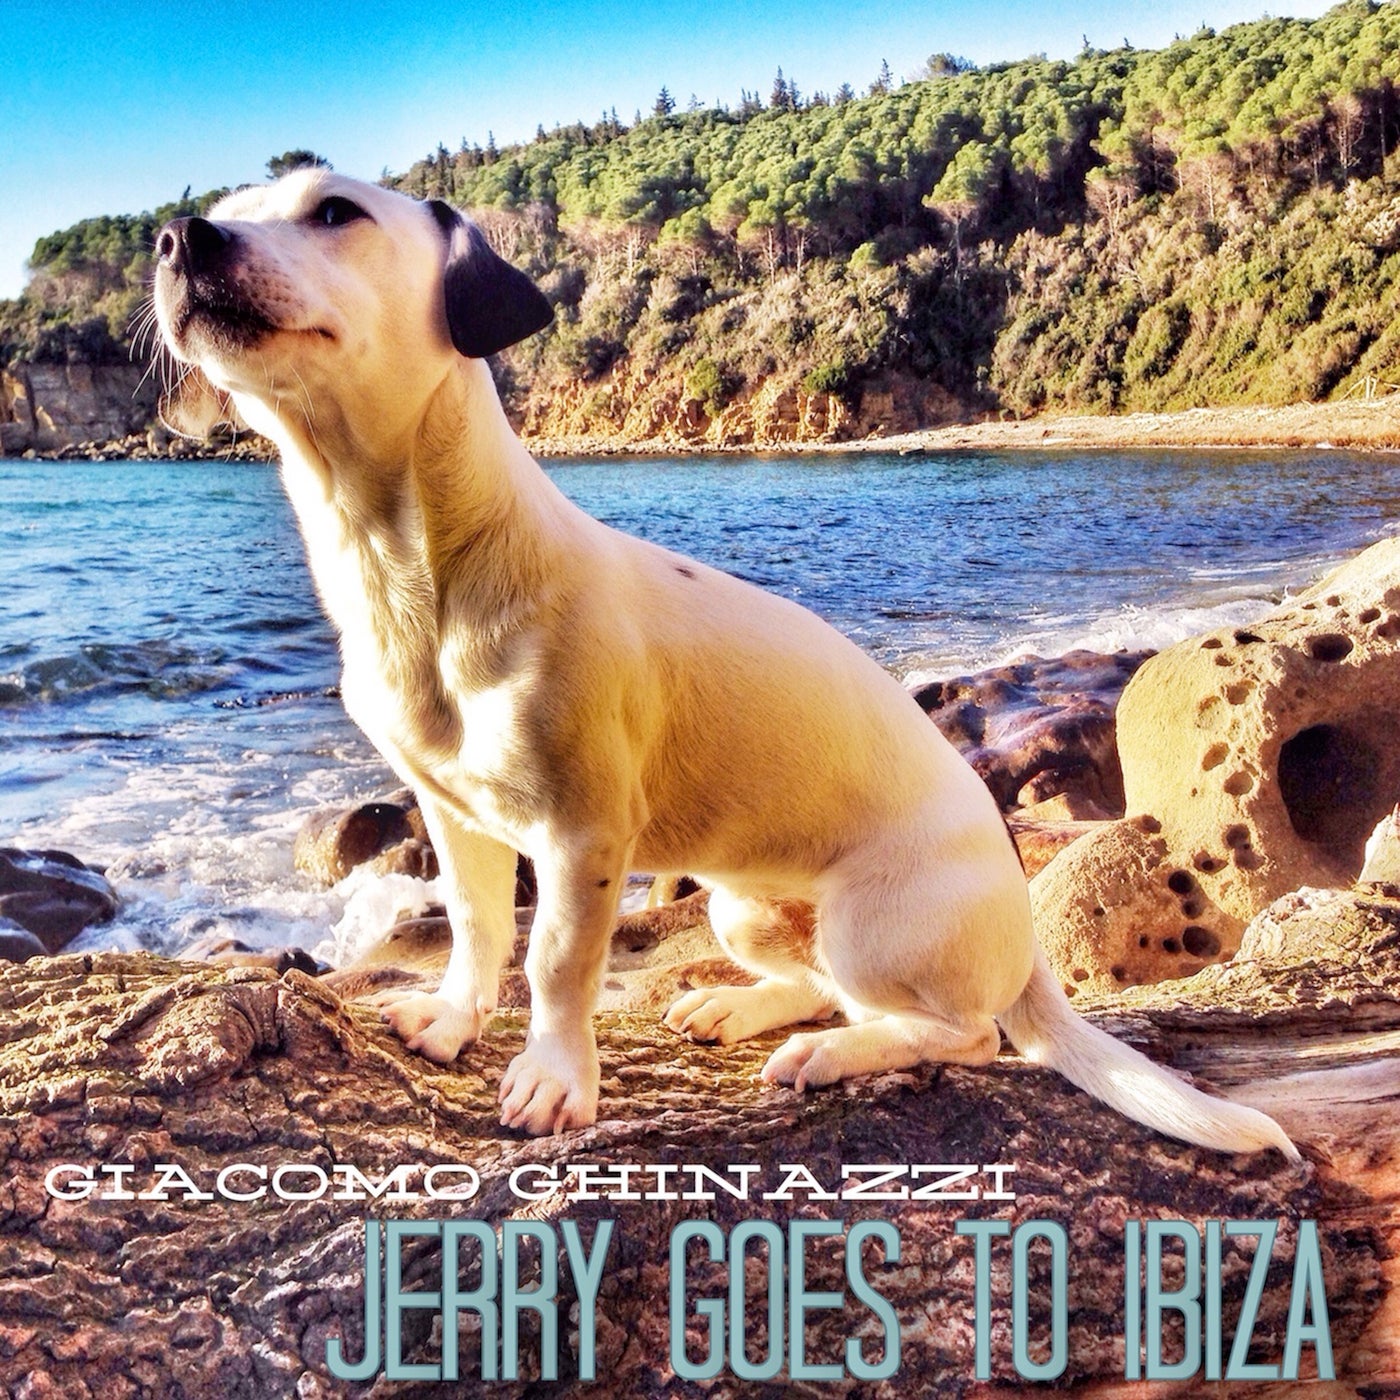 Jerry Goes to Ibiza